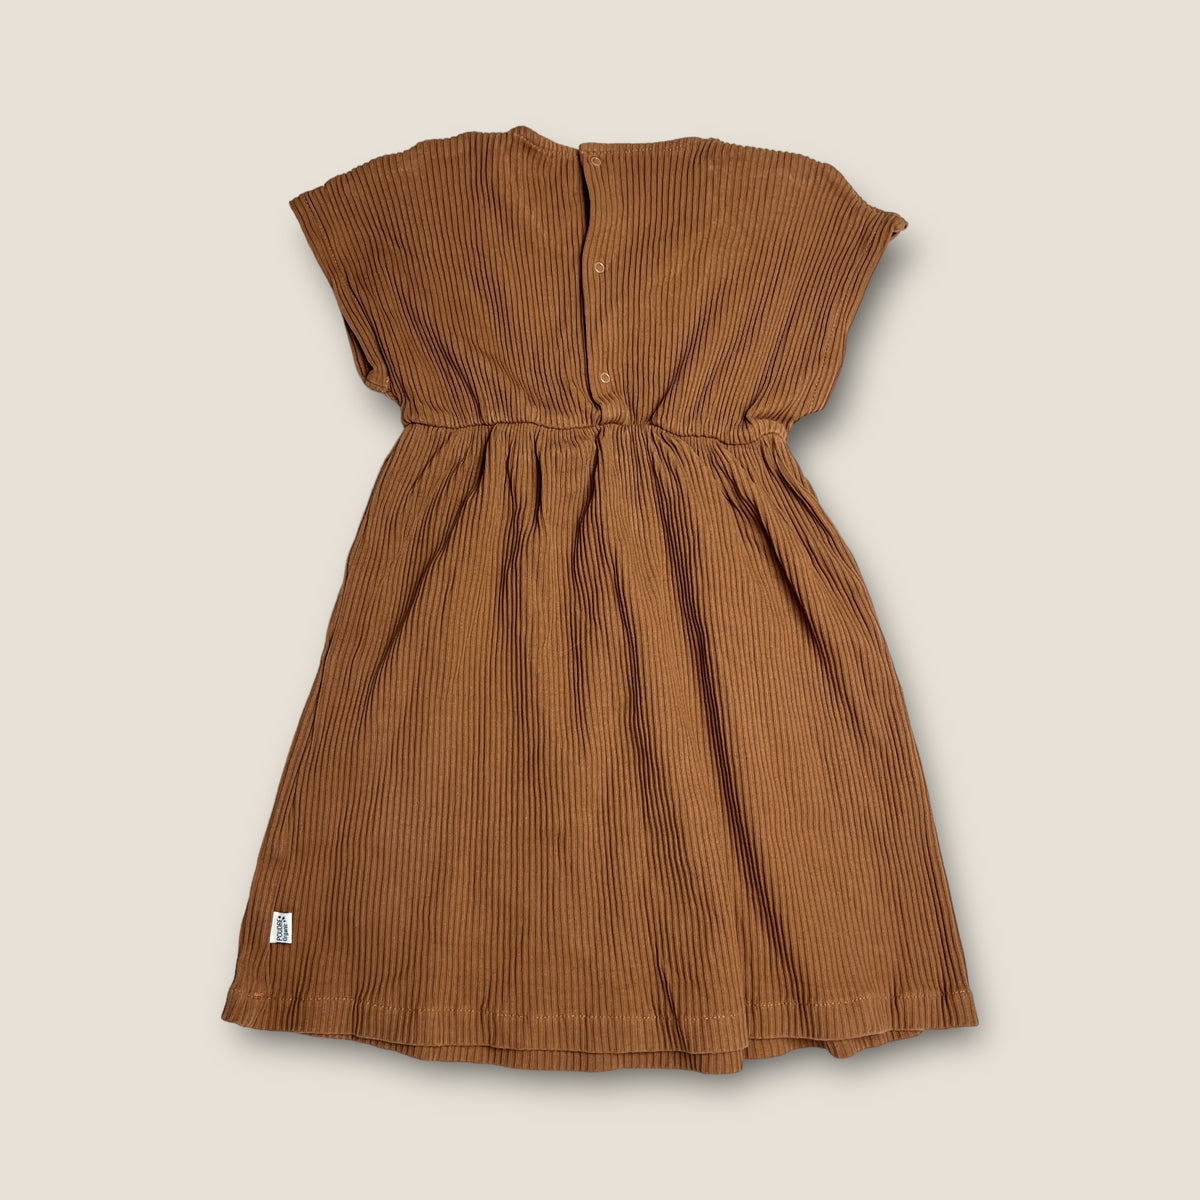 Poudre Organic Dress size 7-8 years